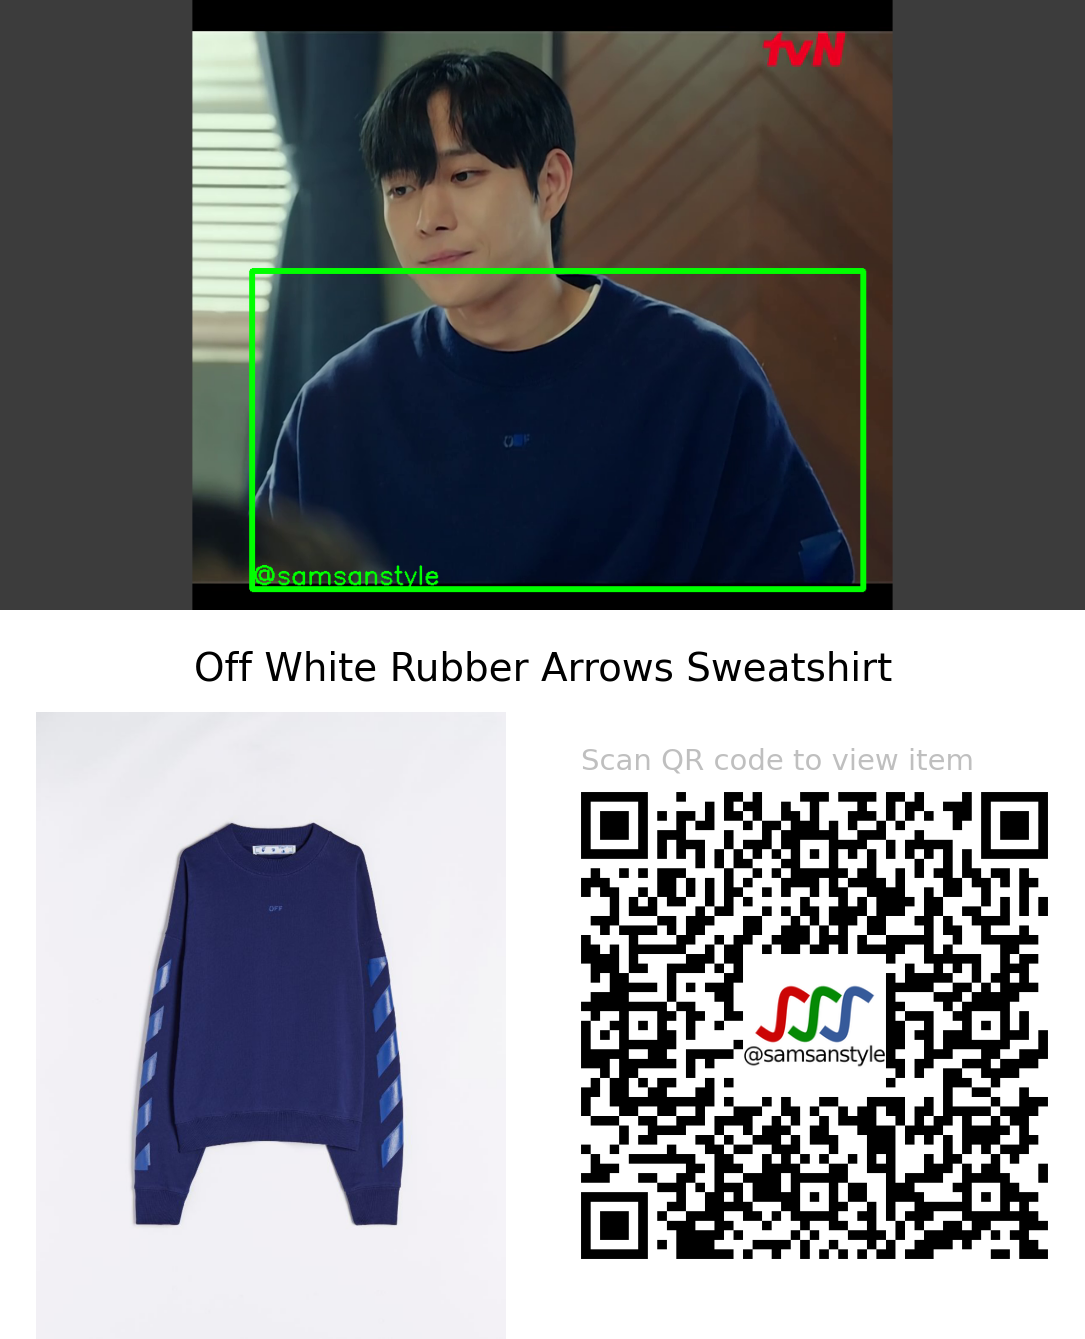 Kim Youngdae | Shooting Stars E08 | Off White Rubber Arrows Sweatshirt